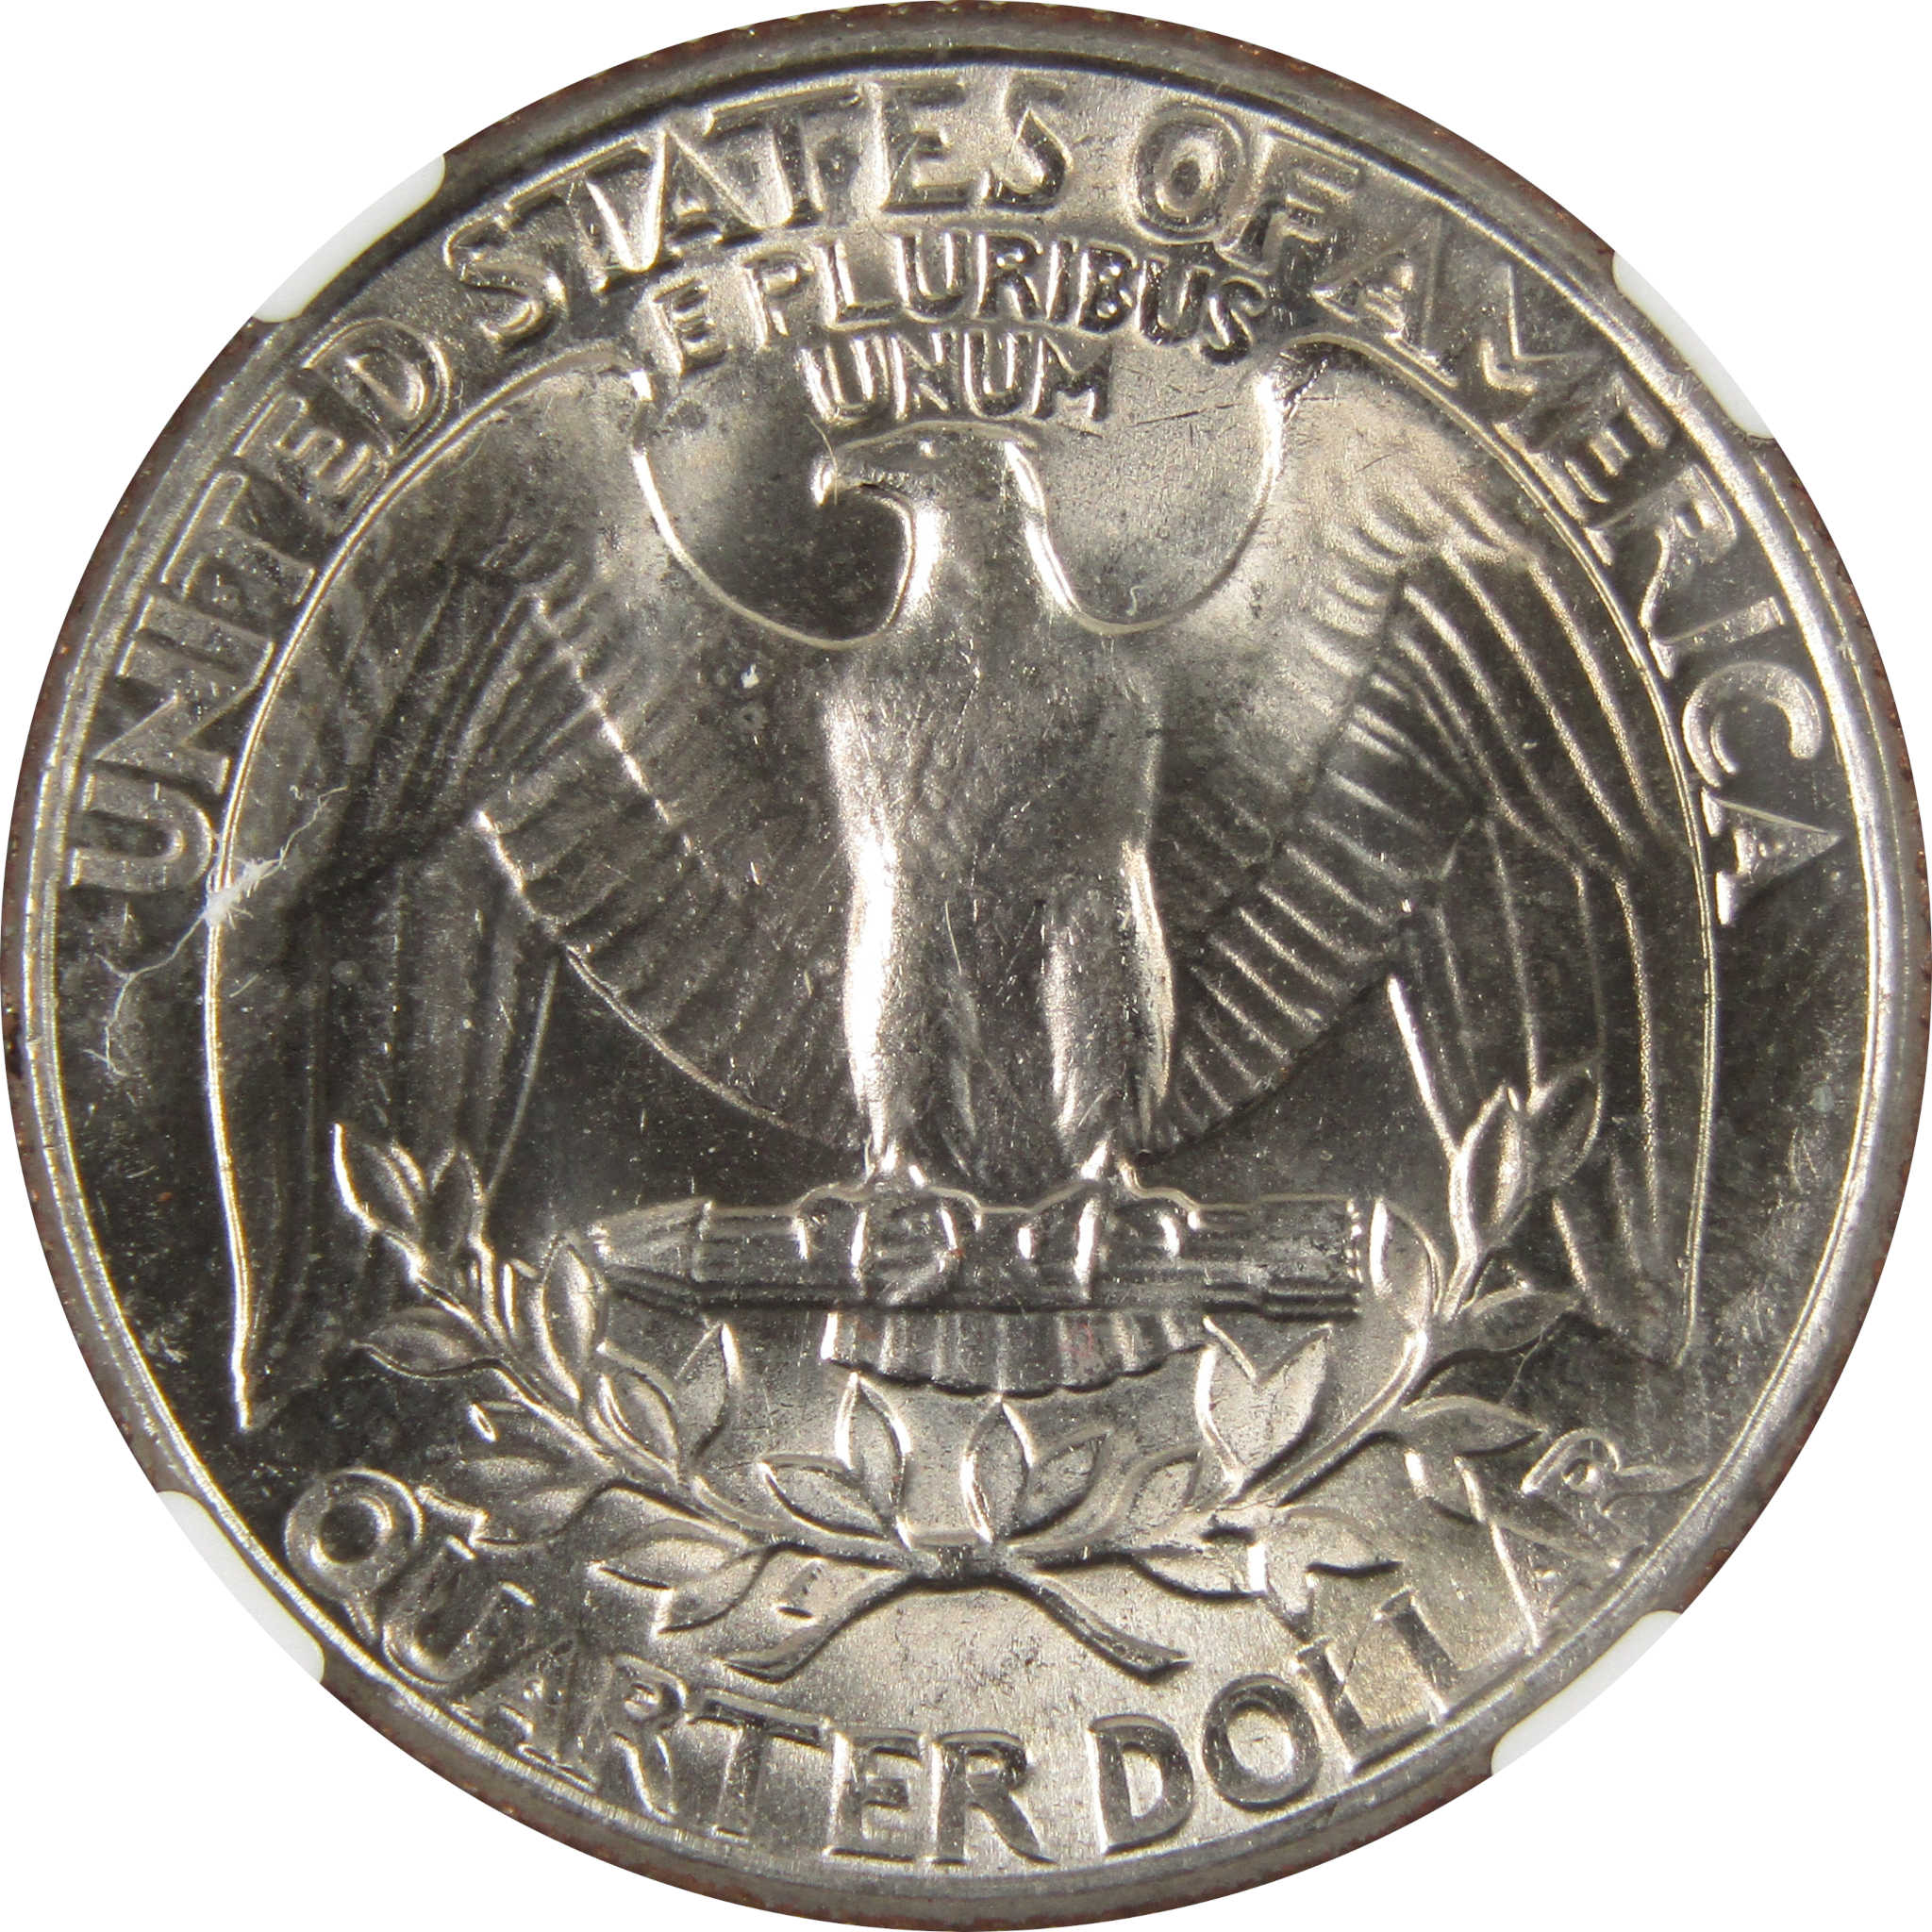 1983 D Washington Quarter MS 66 NGC Clad Uncirculated Coin SKU:I9512